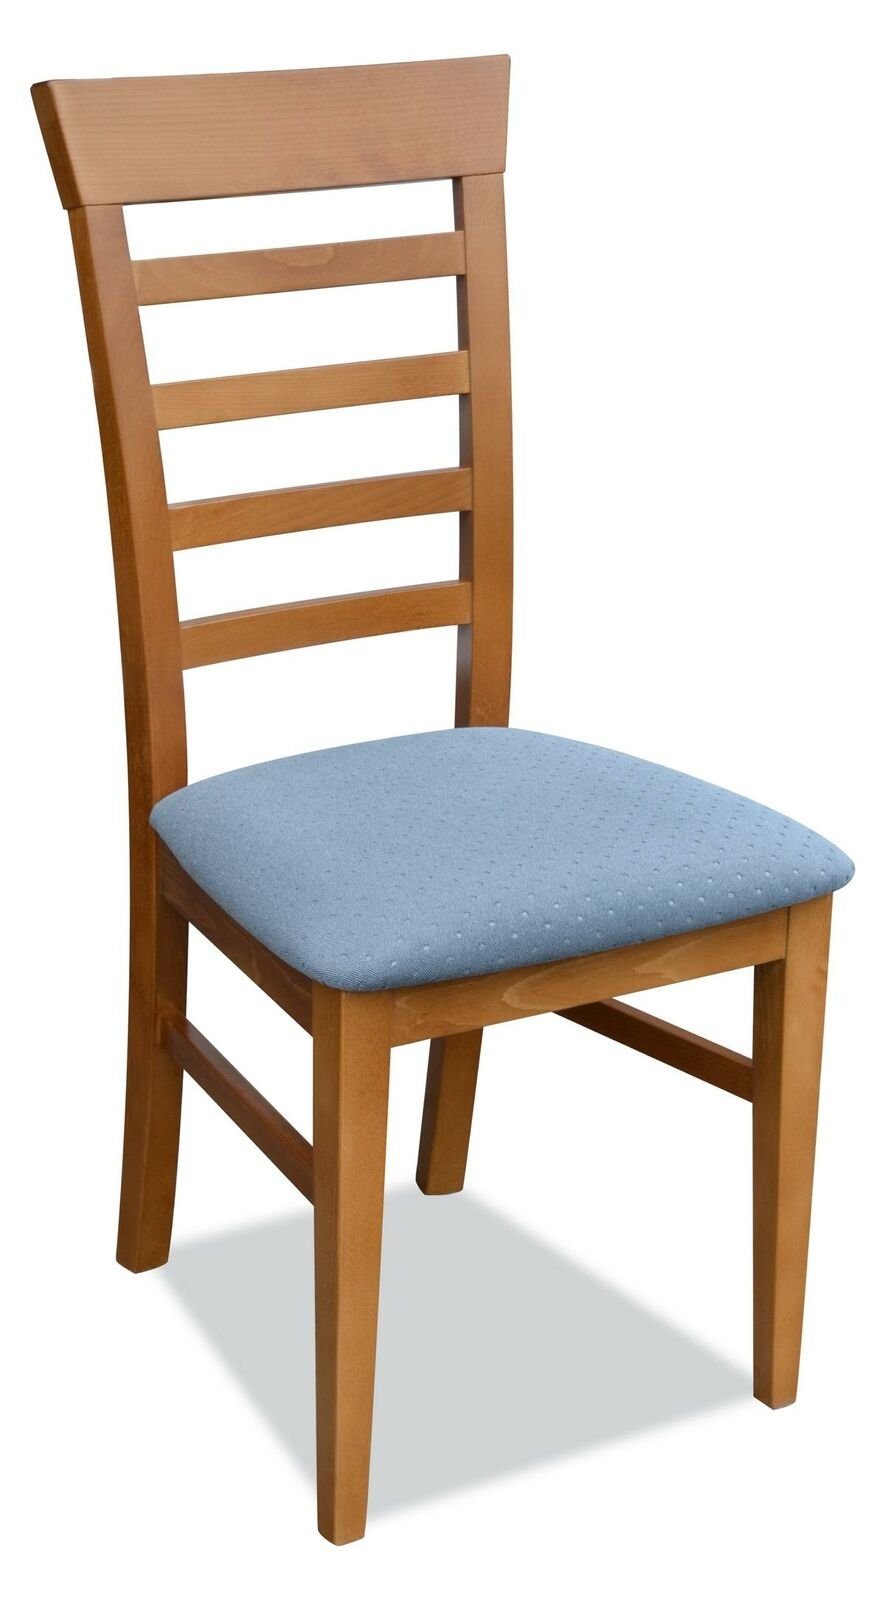 Design Textil Sessel Stuhl, Wohn Zimmer Lehn Leder Stuhl Stühle JVmoebel 8x Polster Set Ess Neu